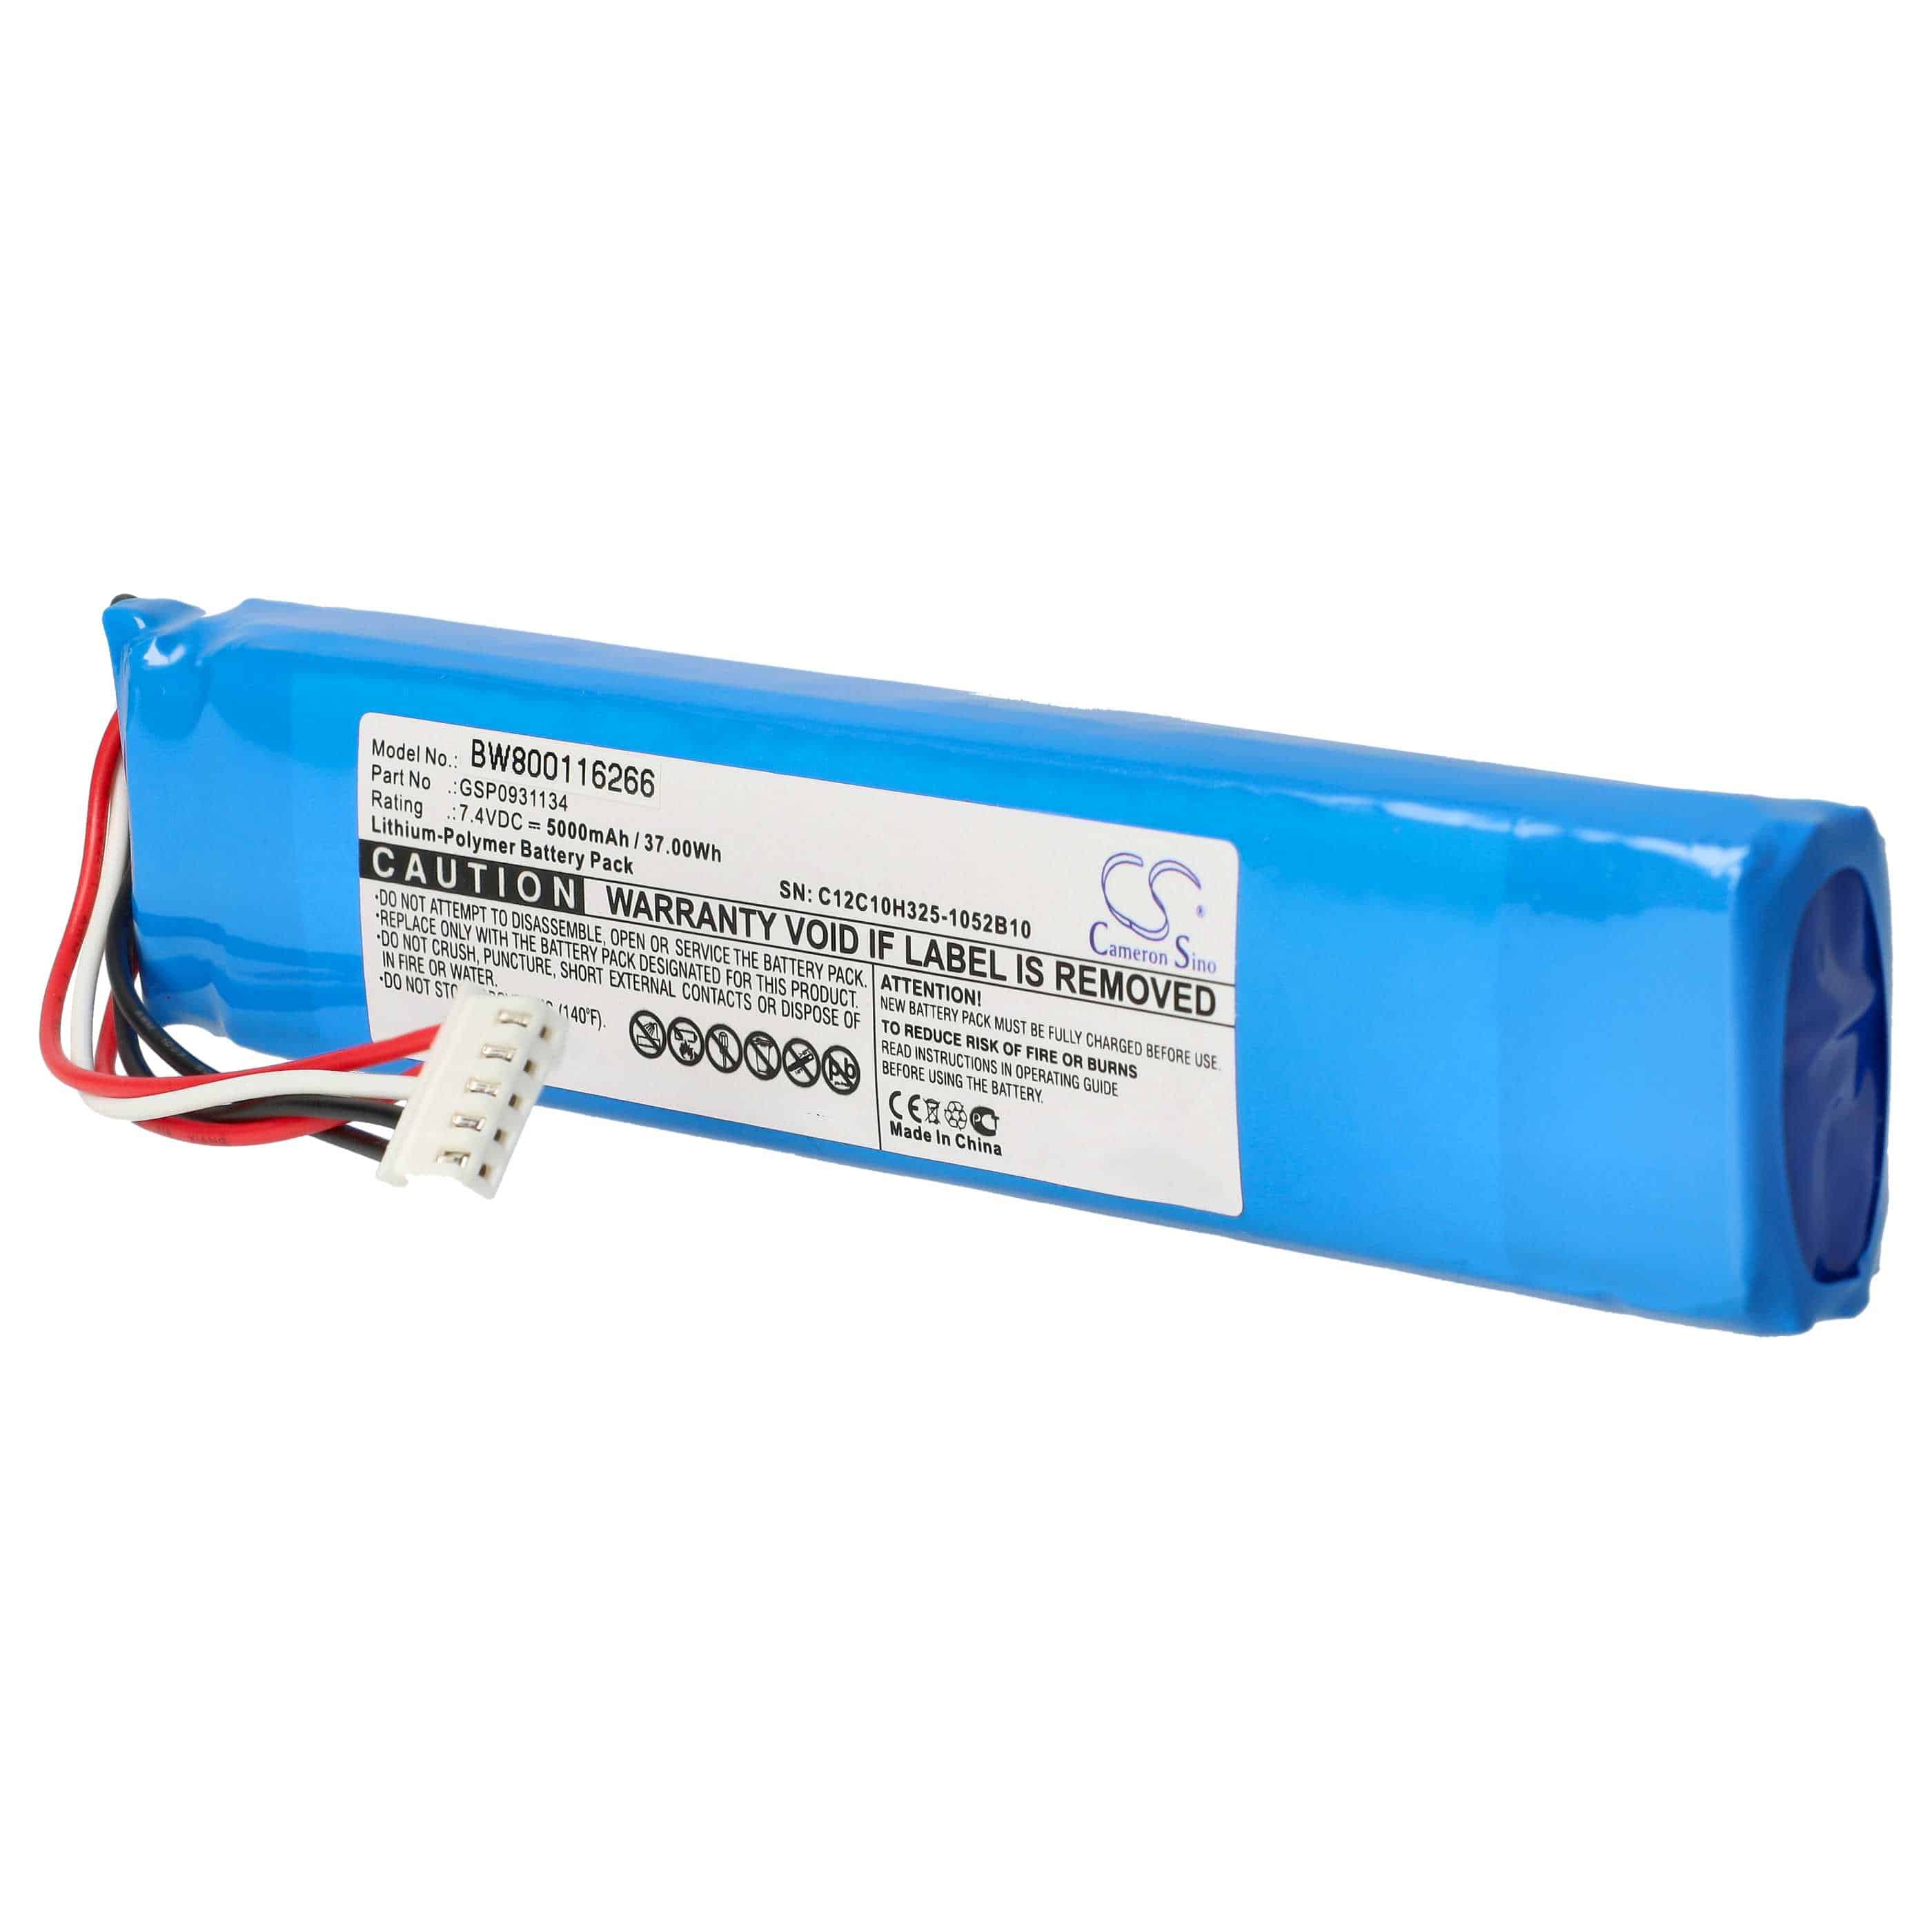 Batterie remplace JBL GSP0931134 pour enceinte JBL - 5000mAh 7,4V Li-polymère